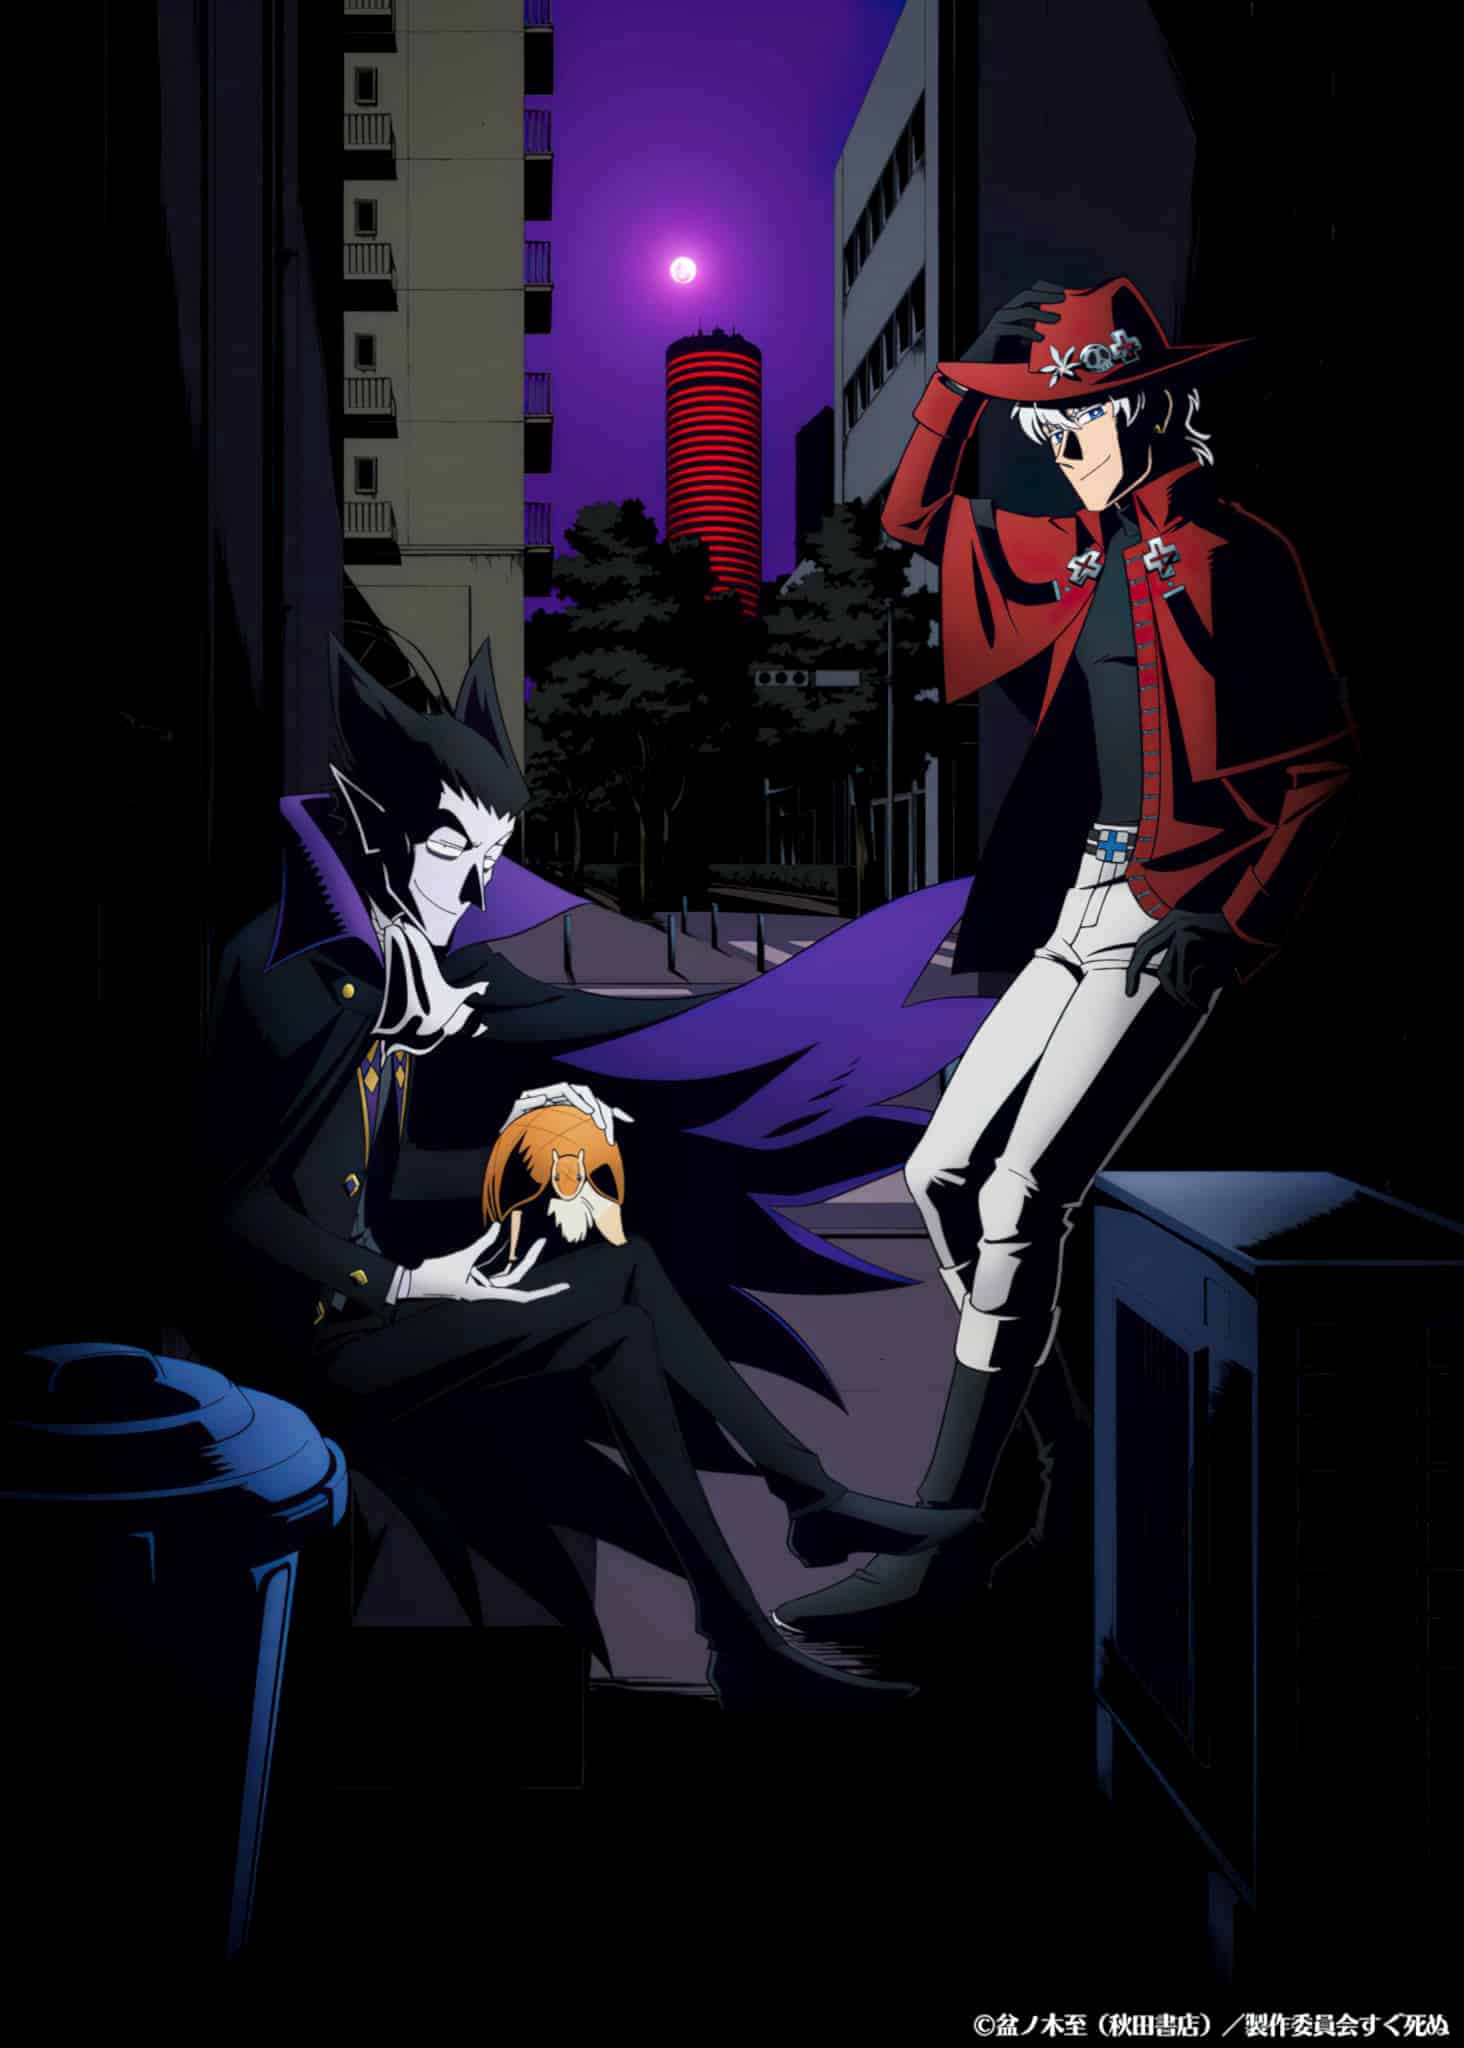 Premier visuel pour anime The Vampire Dies in No Time